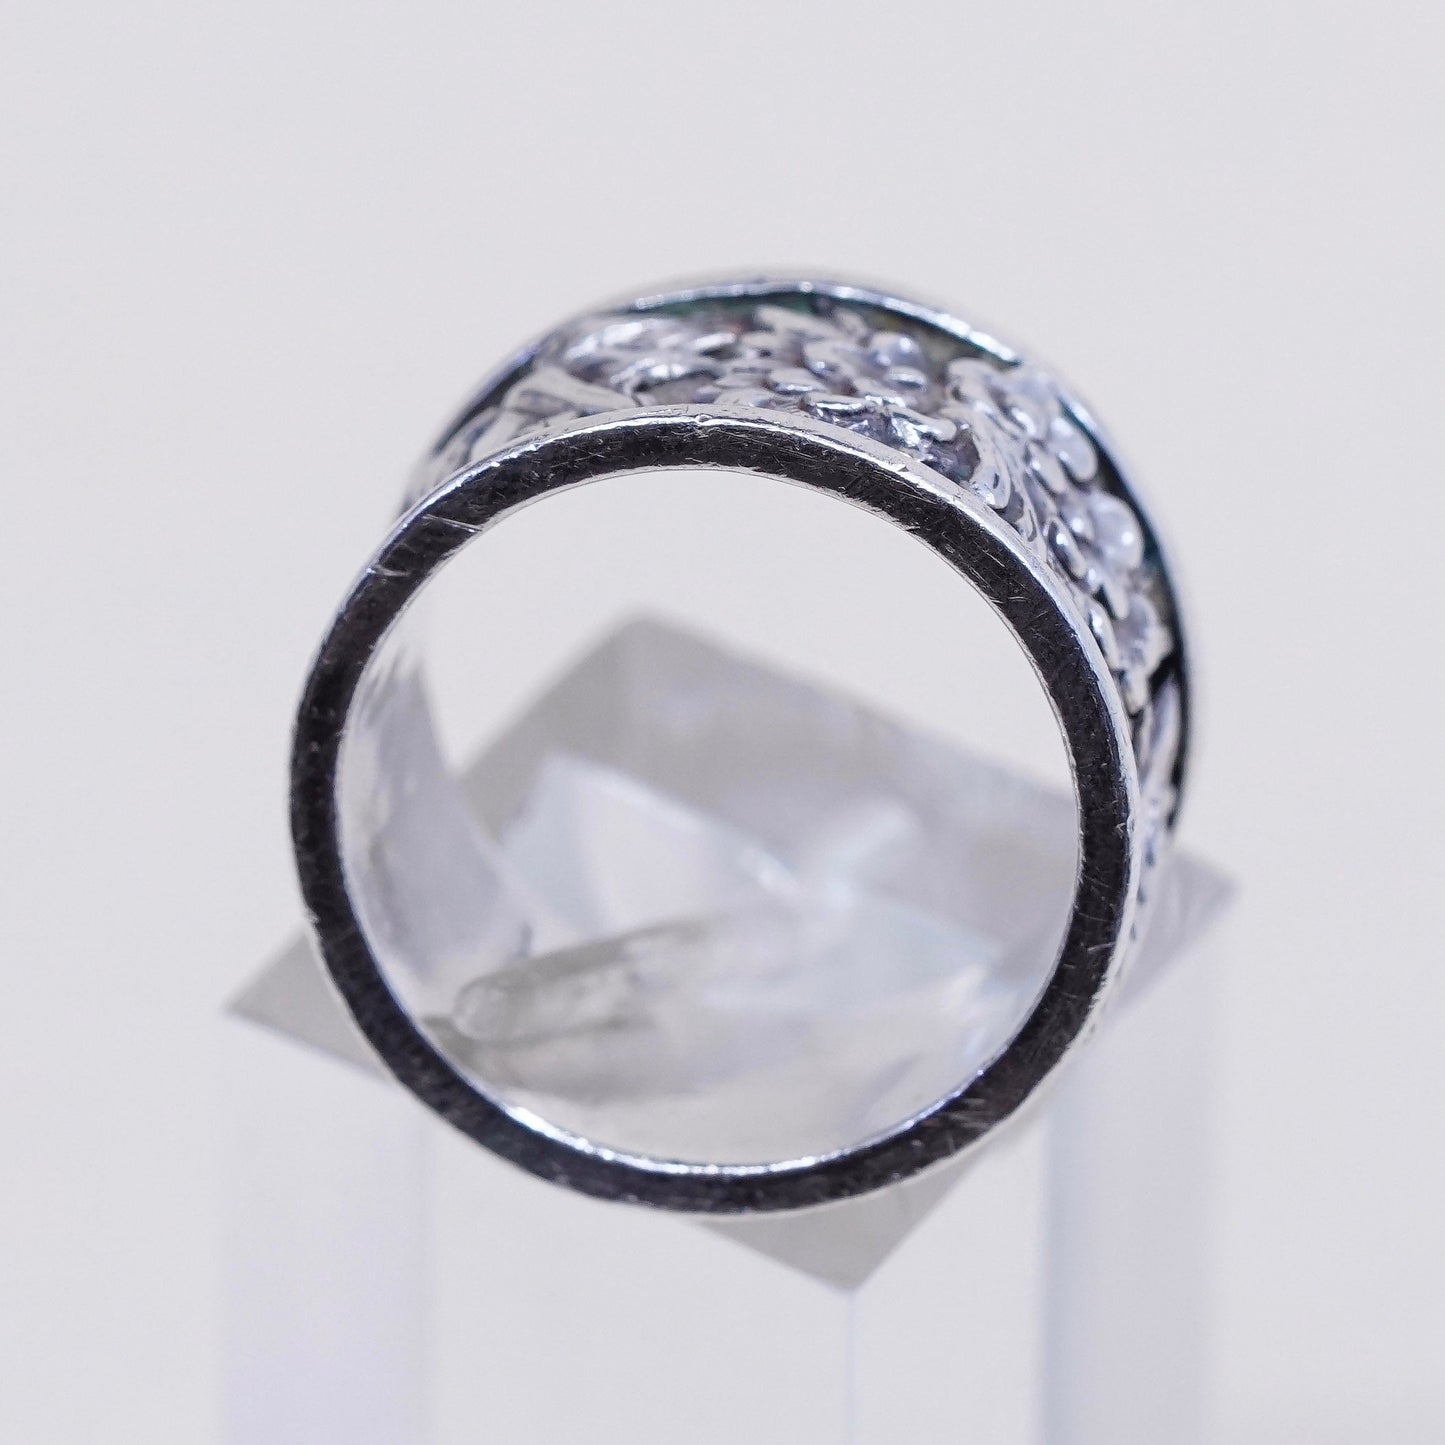 Size 6.25, Vintage sterling silver handmade ring, 925 band w/ flower N leaves